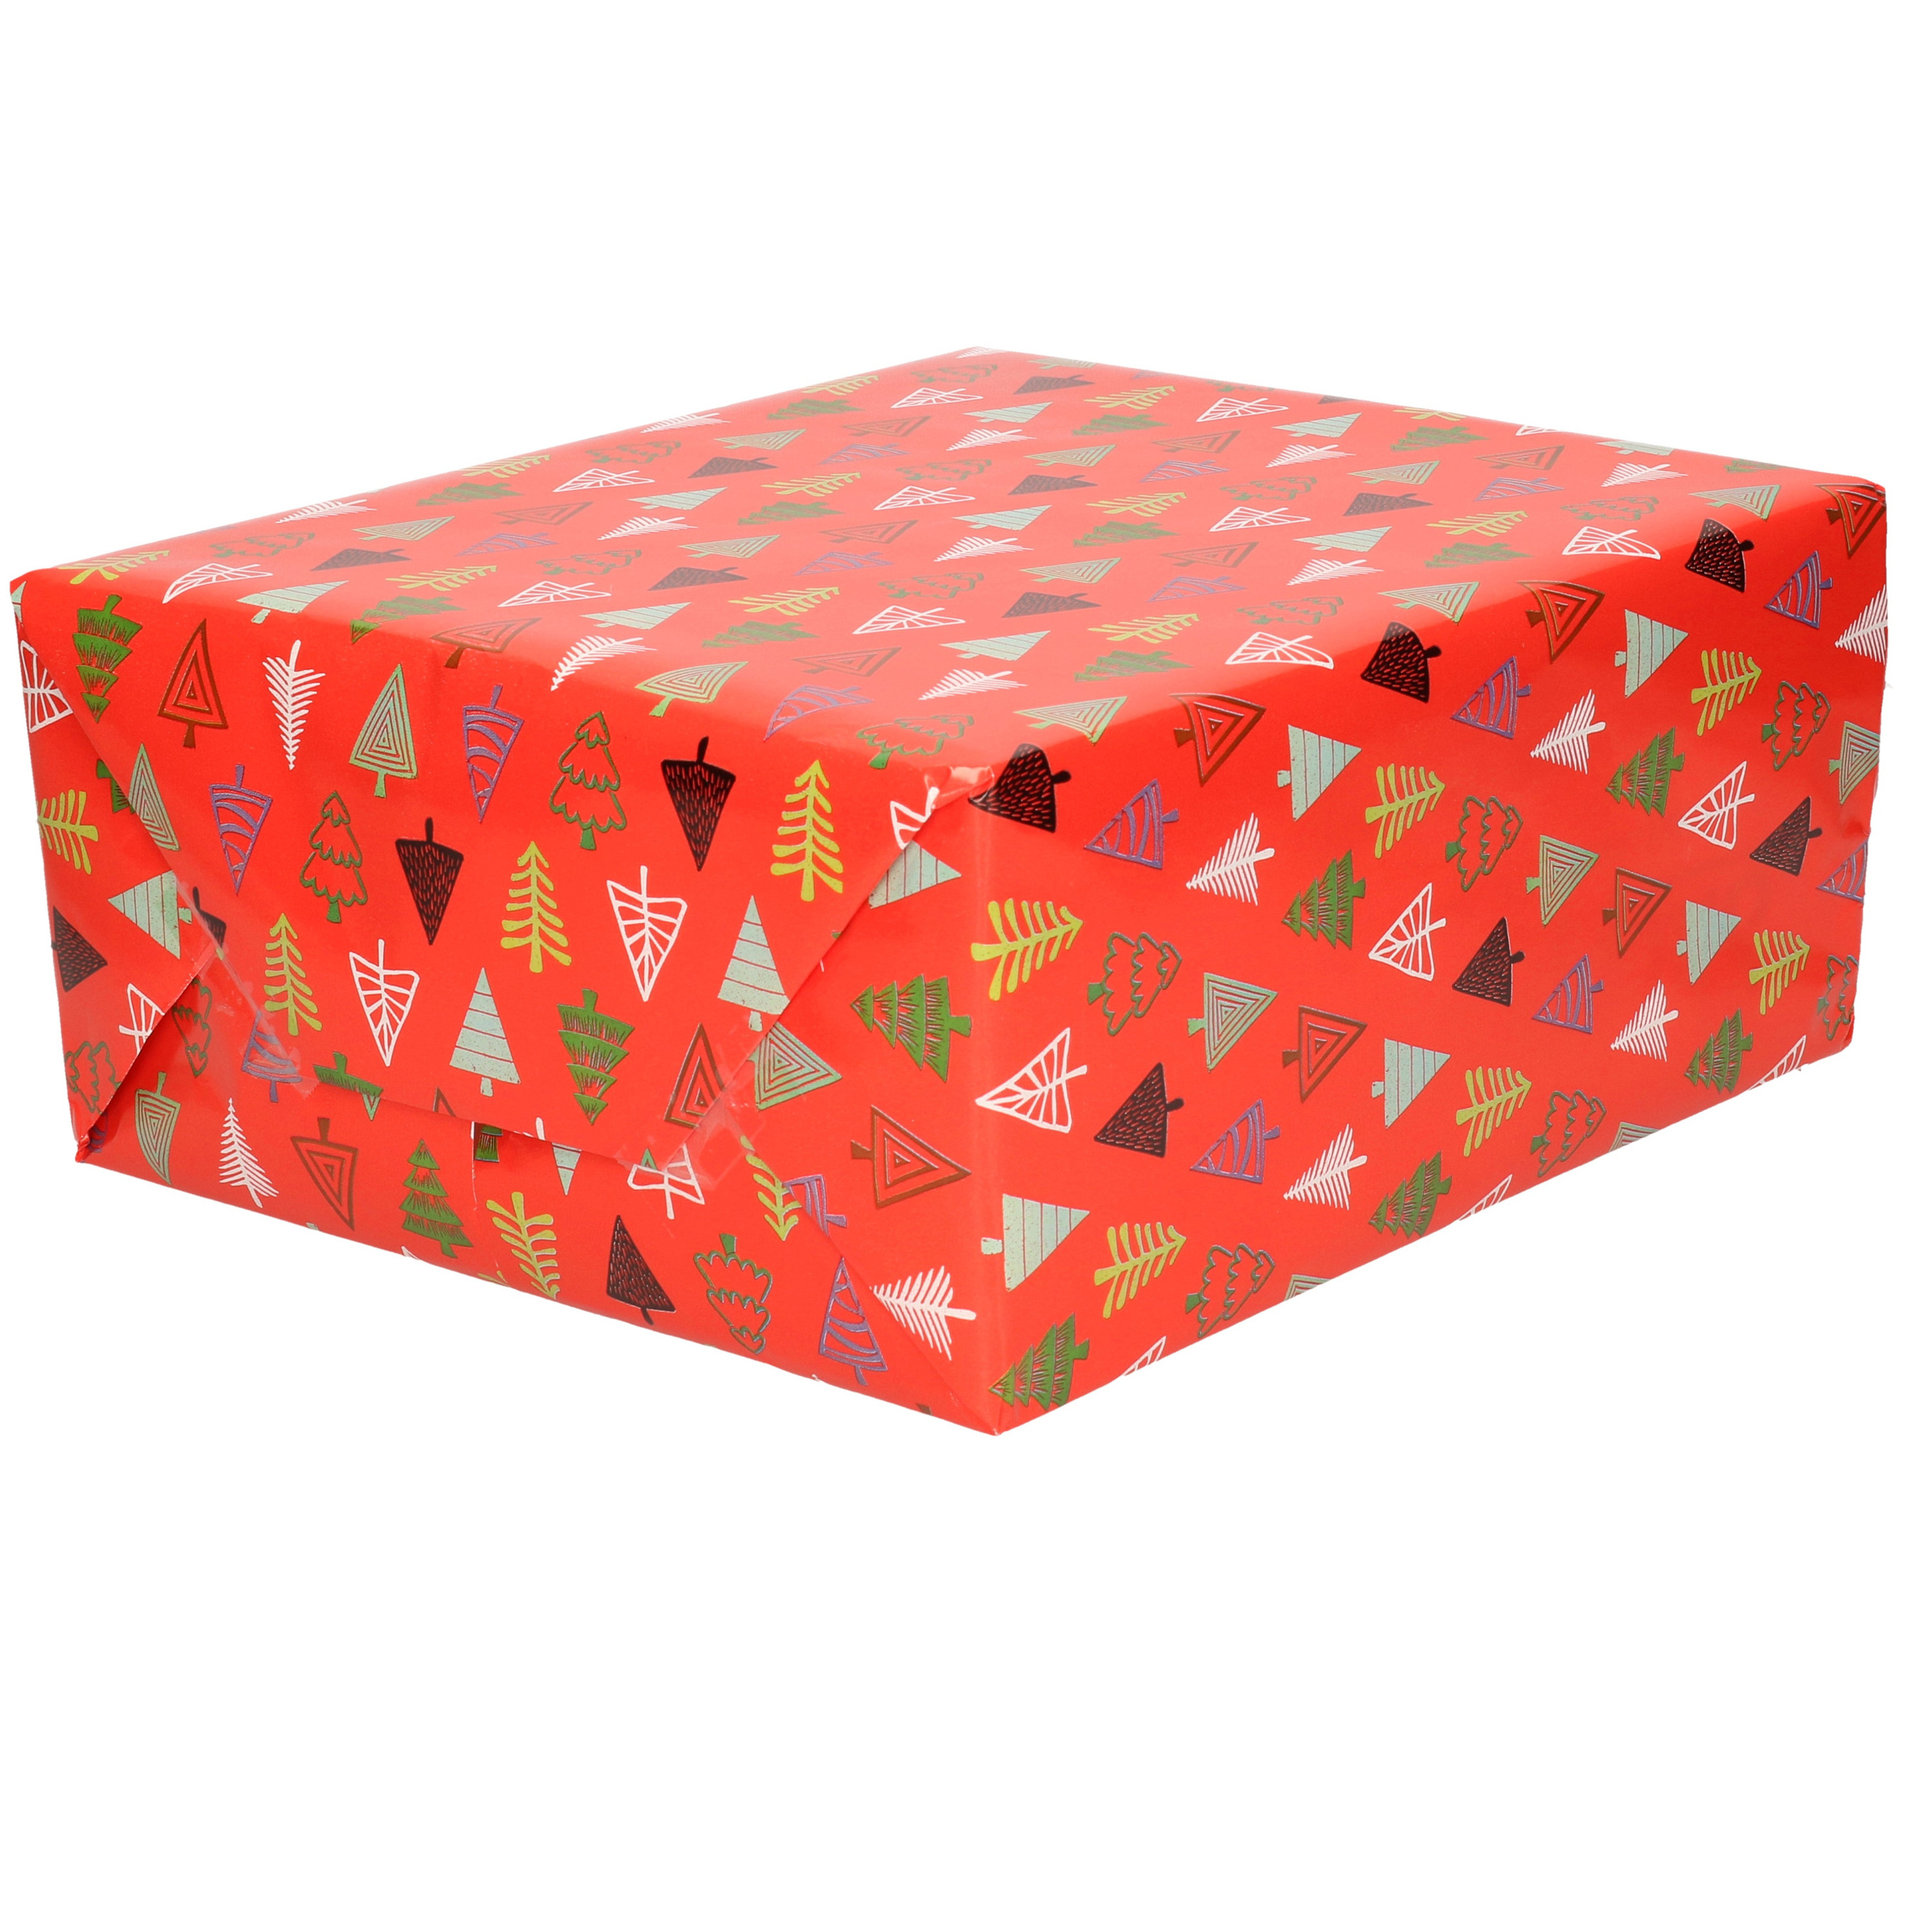 1x Rollen Kerst inpakpapier/cadeaupapier rood 2,5 x 0,7 meter